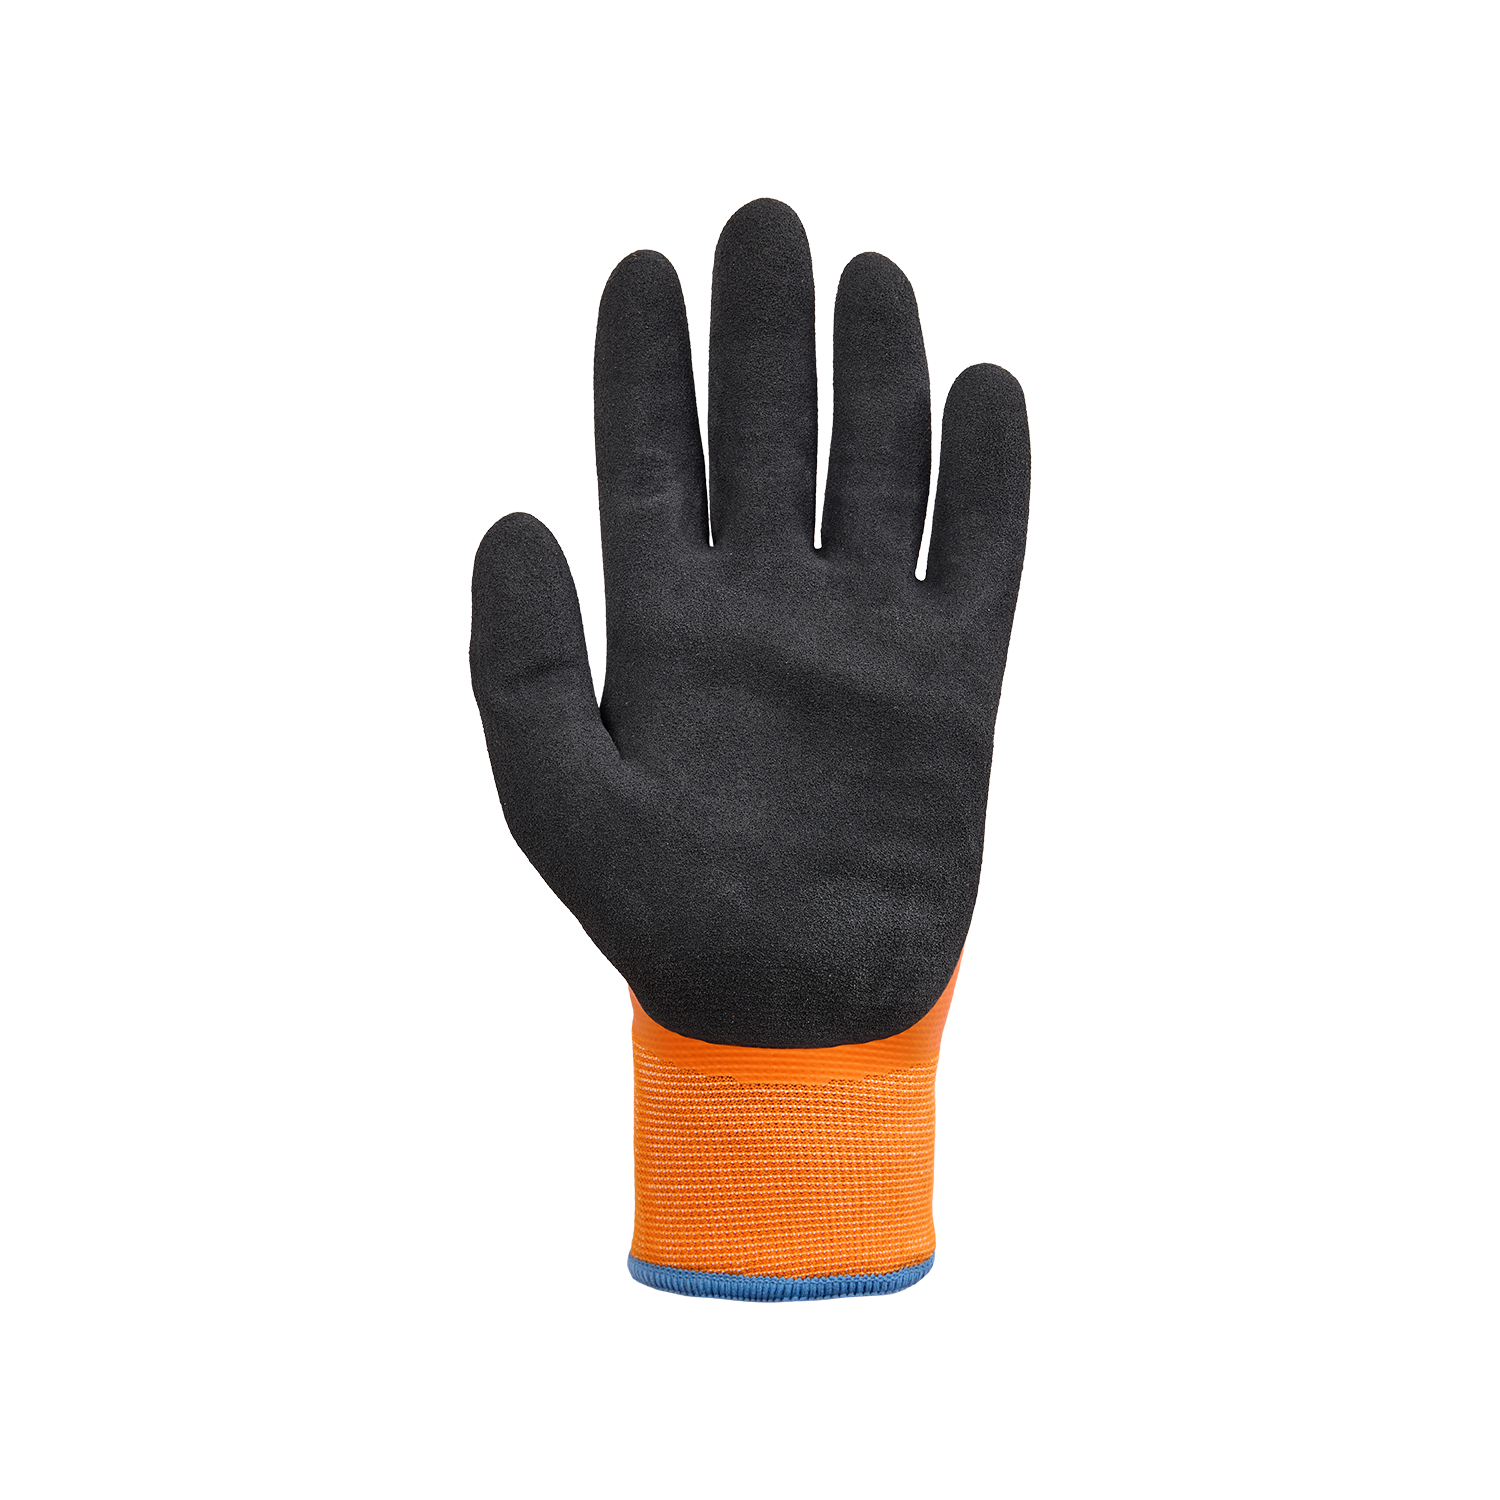 NORSE Arctic guantes de montaje de invierno impermeables talla 9